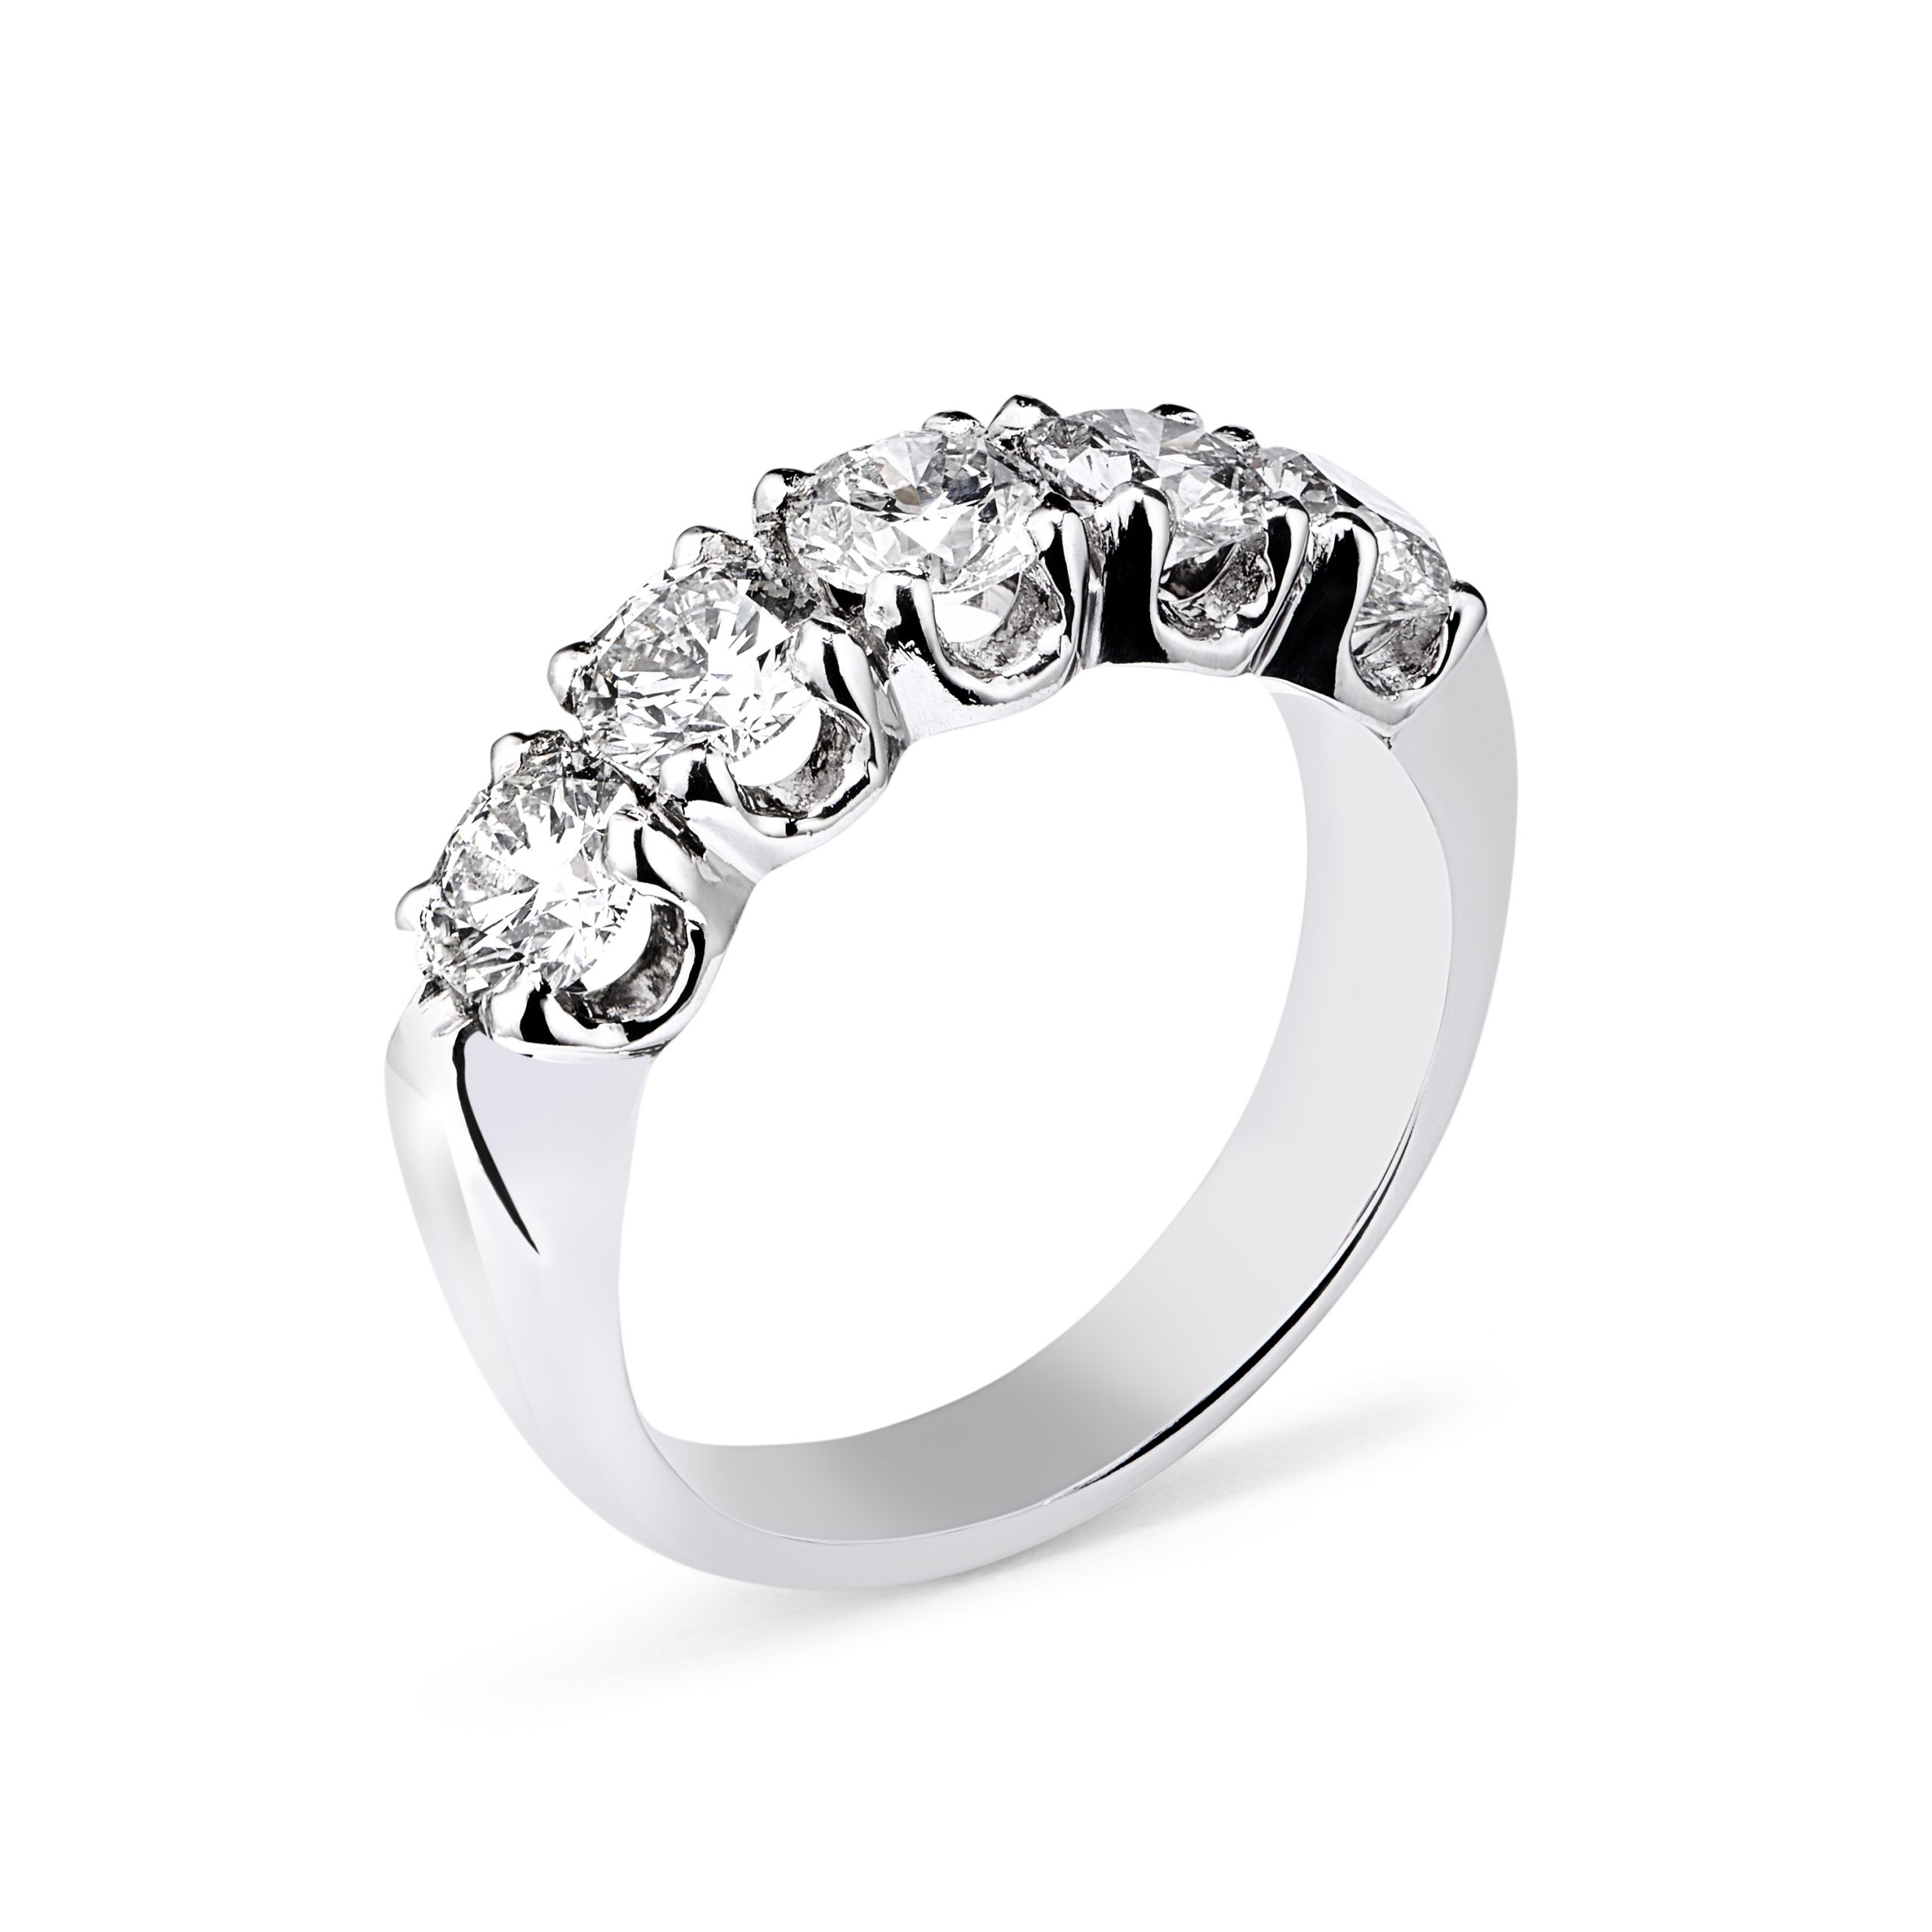 1.17ct Brilliant Cut 5 Stone Diamond Ring